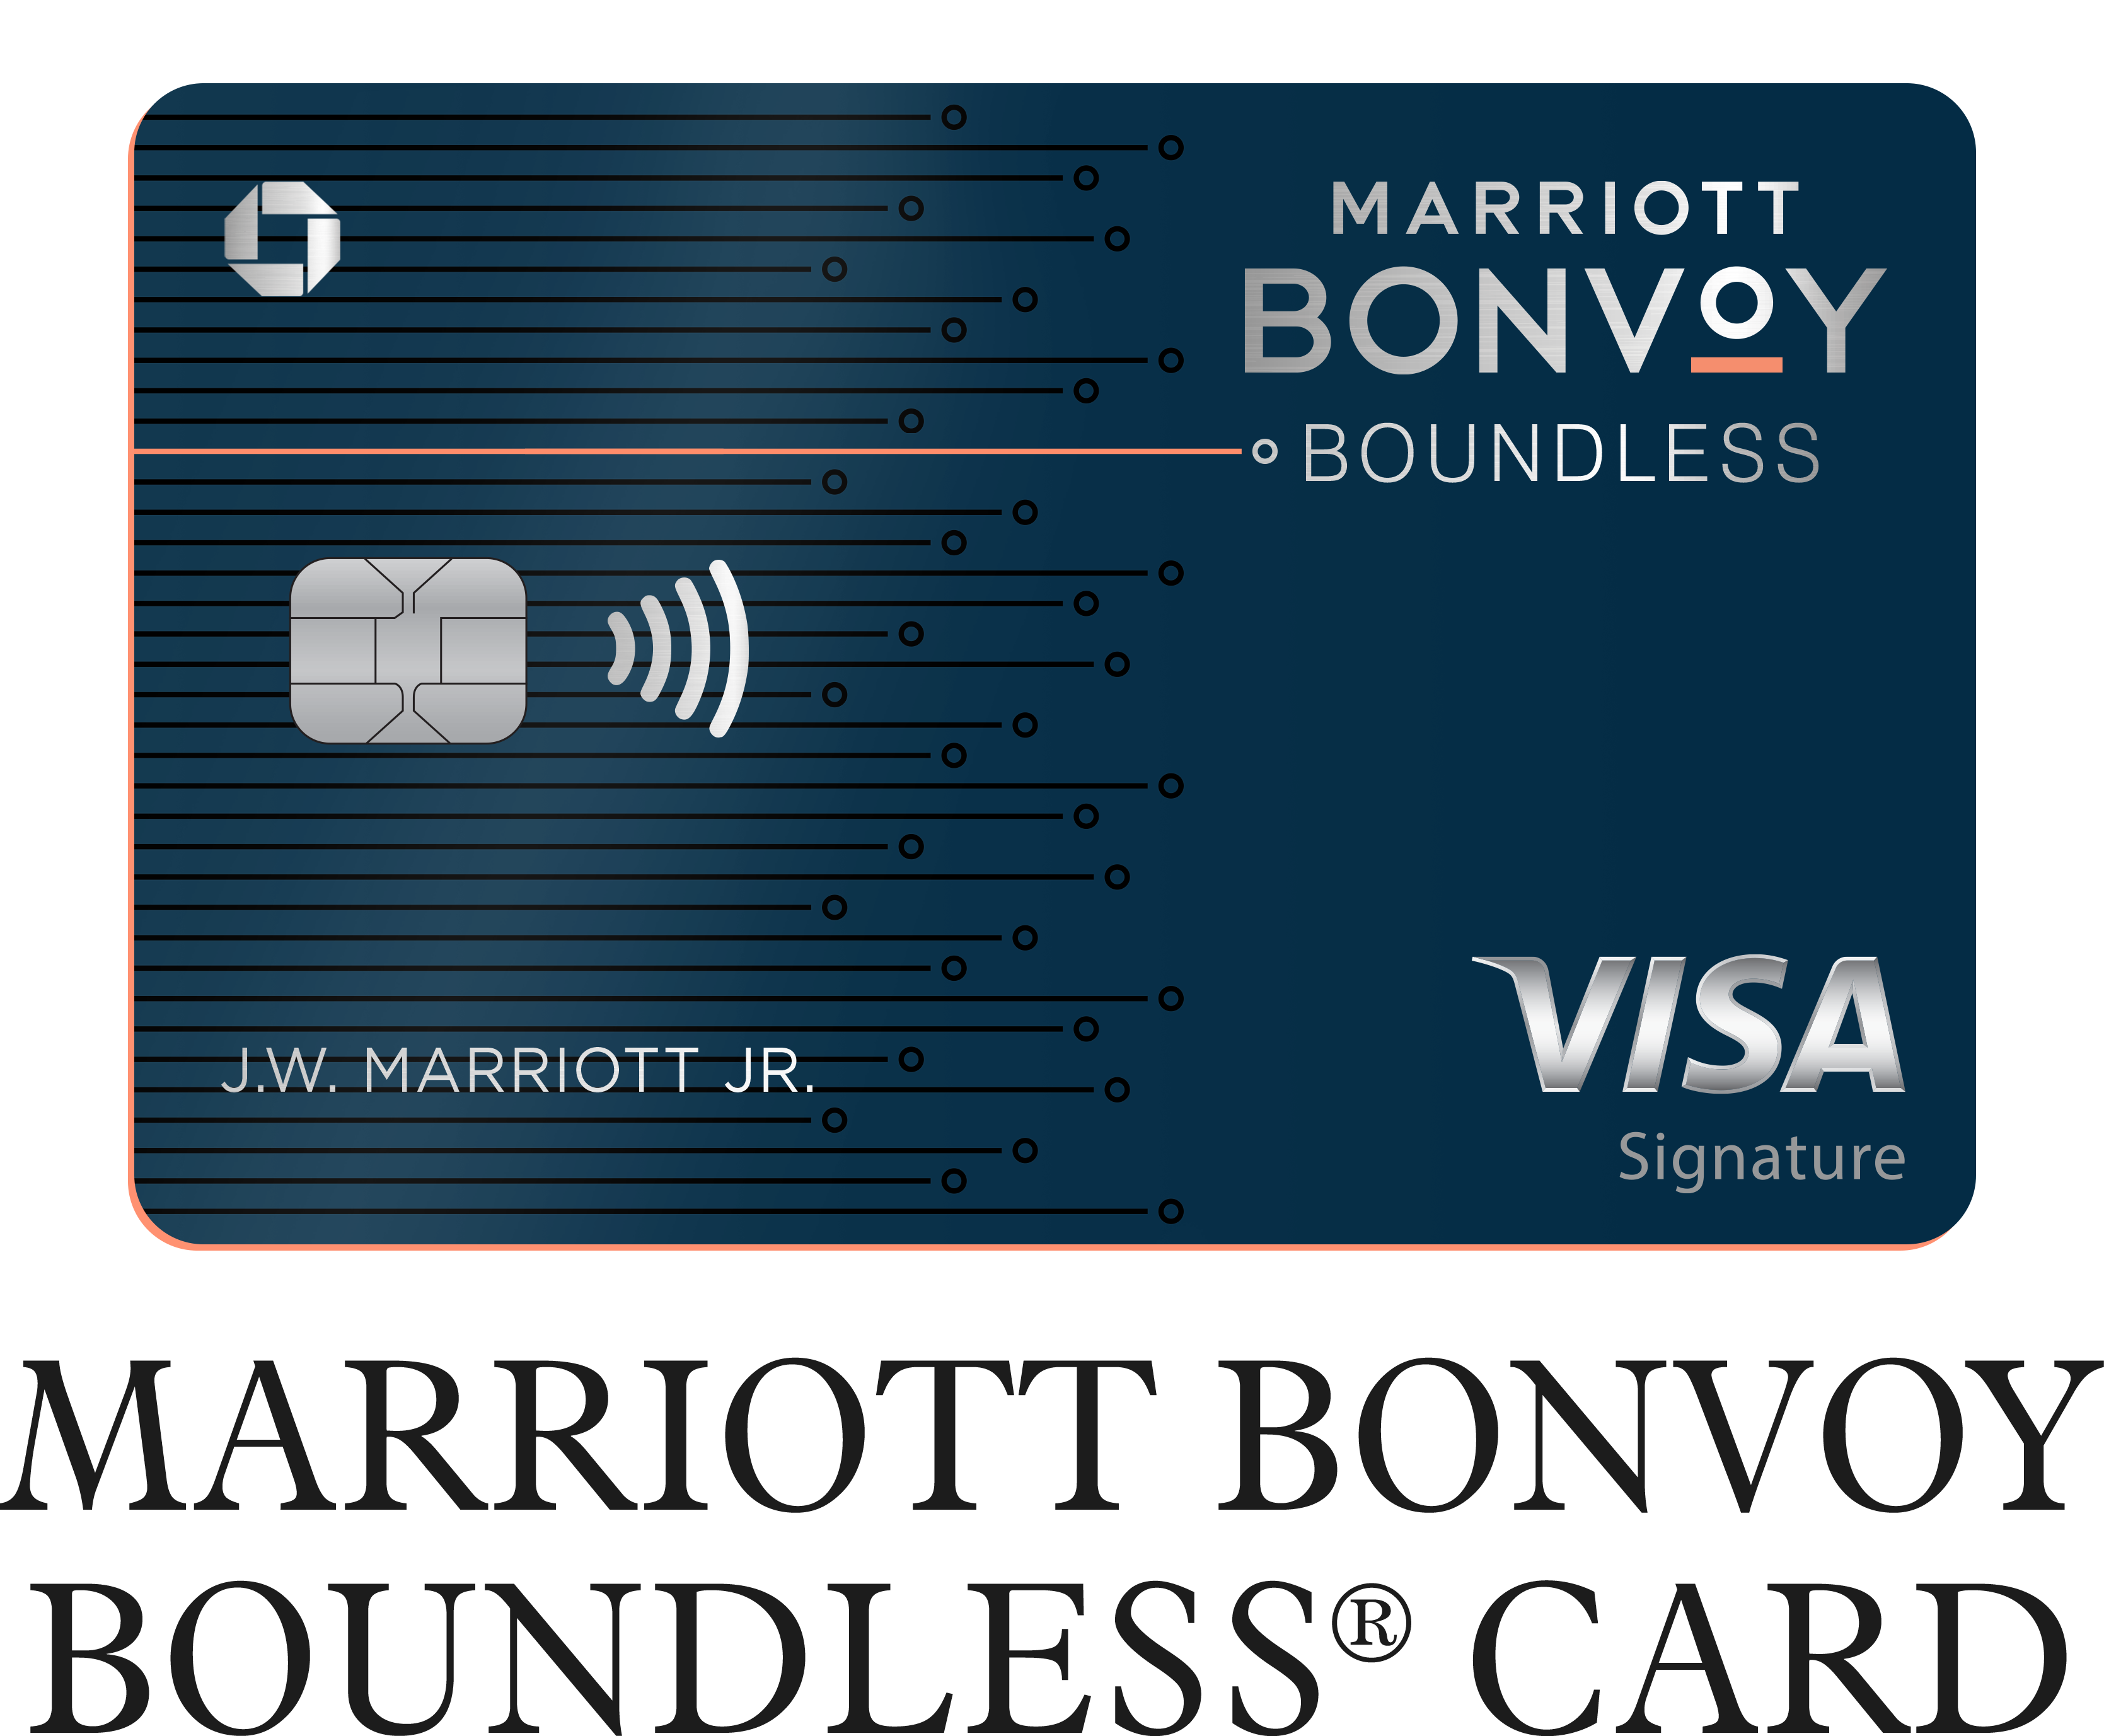 Marriott Bonvoy Boundless Card